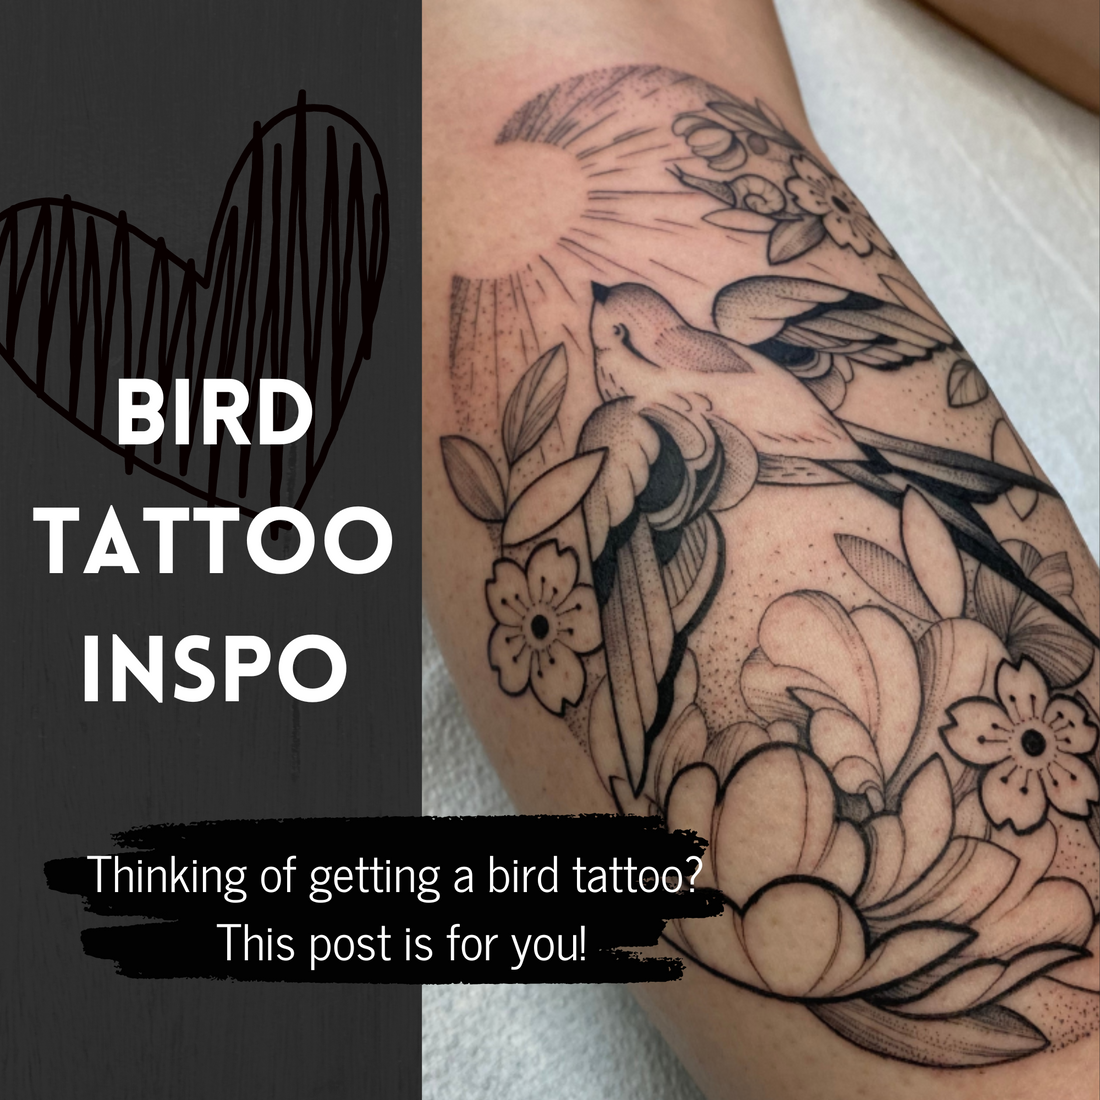 Bird tattoon inspo blog post by floral artist and illustrator Lu Loram Martin, in Toronto, Canaada.